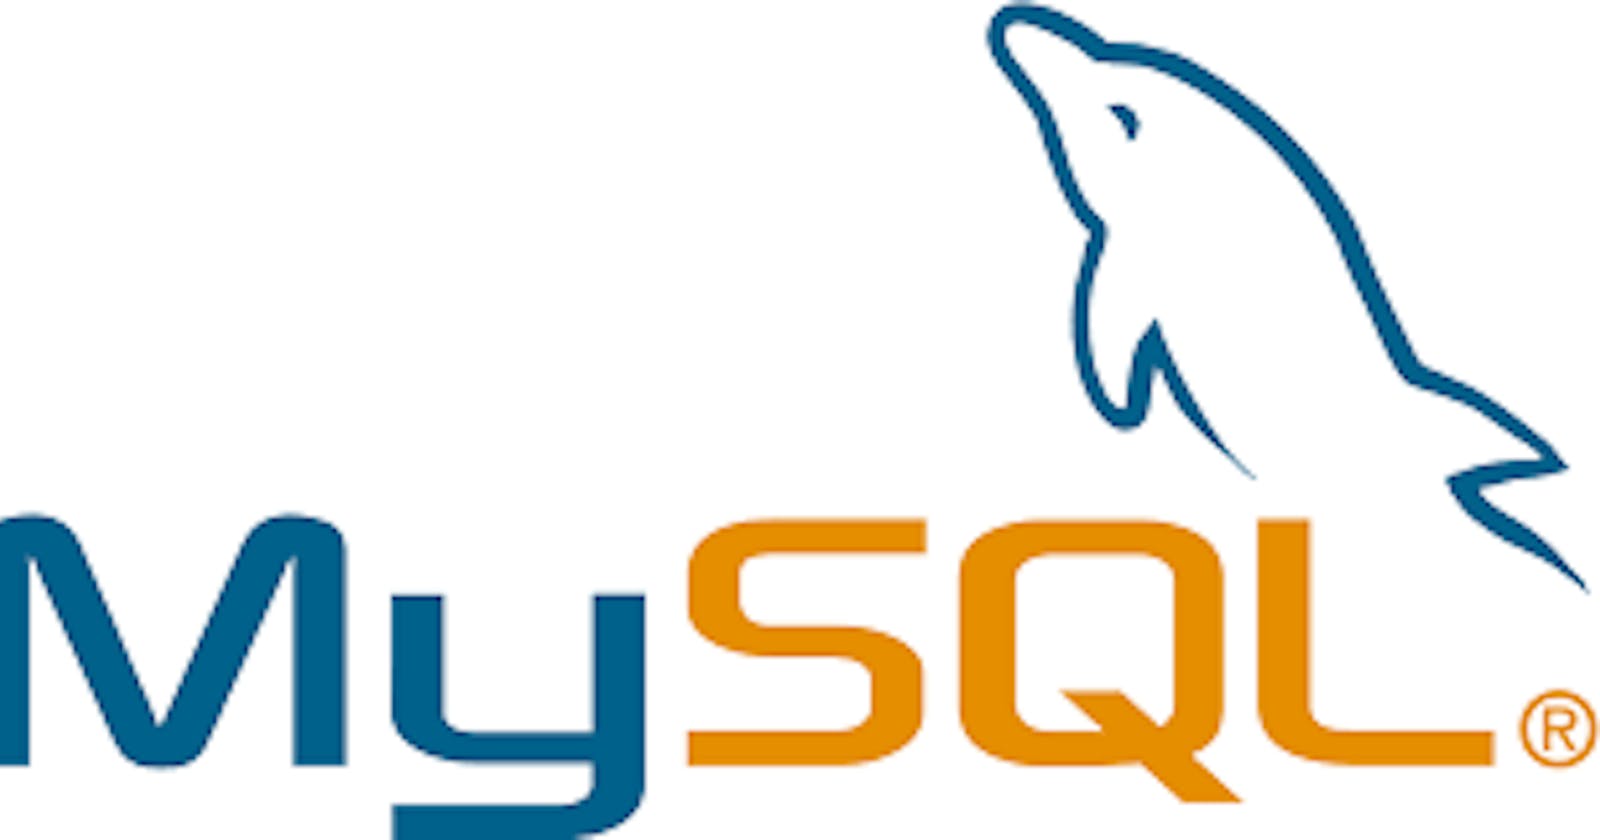 How to install MySQL on Windows or MacBook